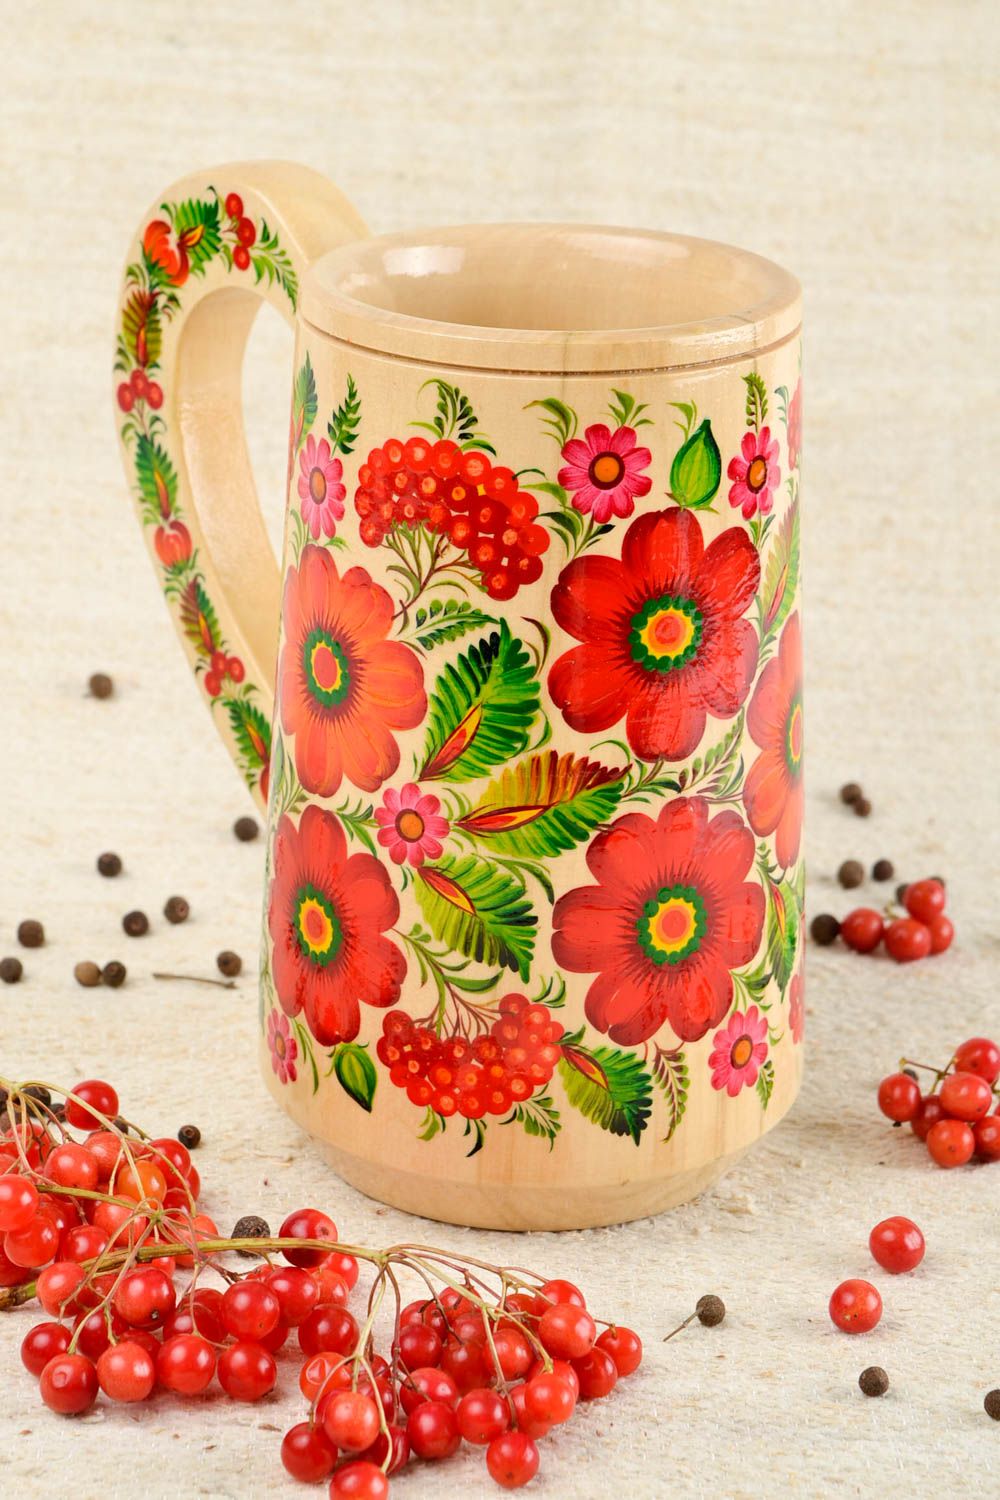 Handmade wooden mug designer glass unusual cup for kitchen decor gift ideas photo 1